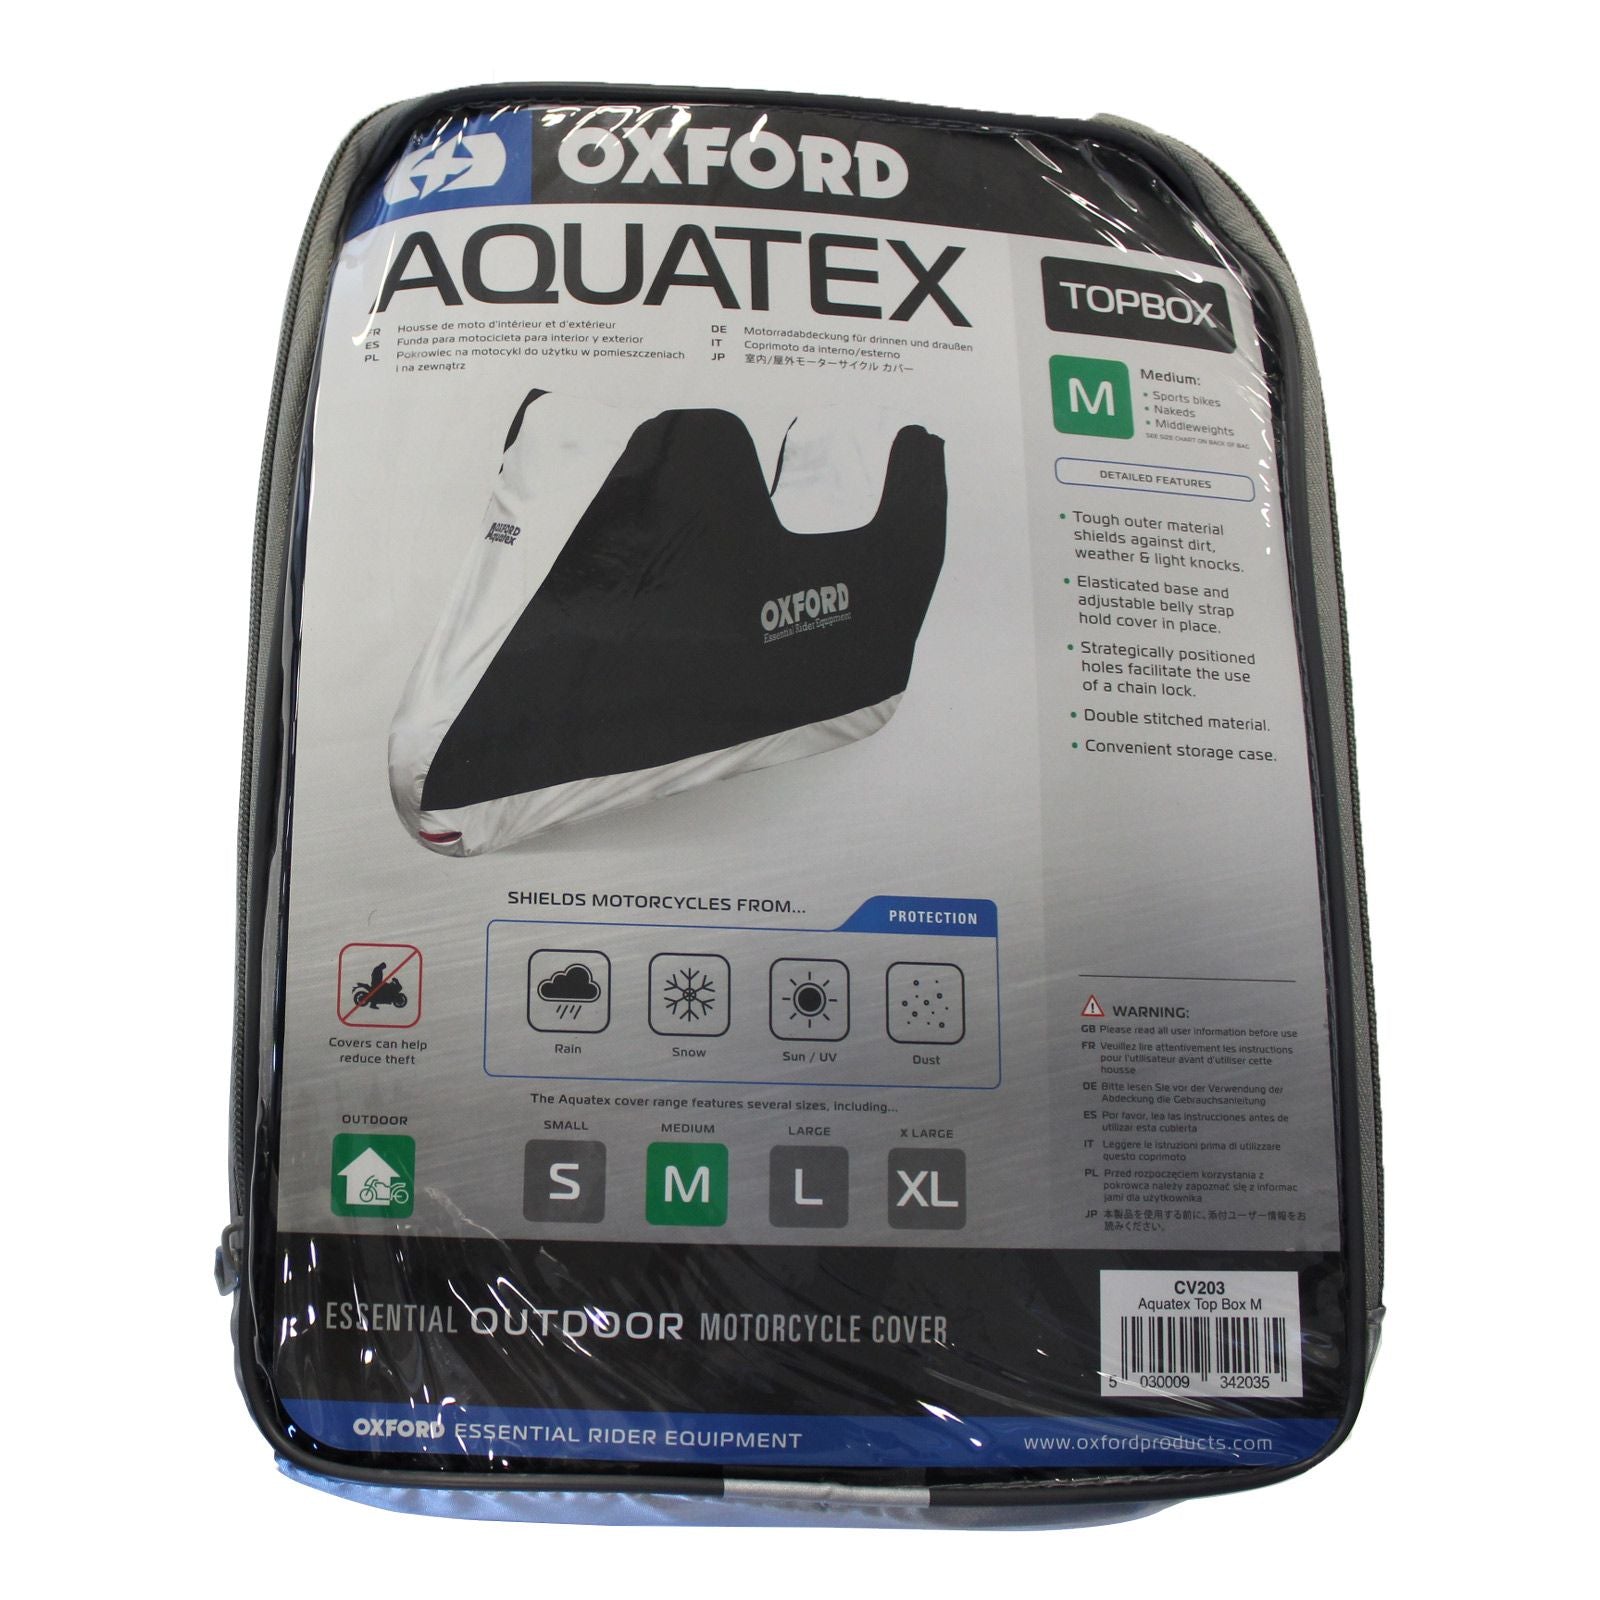 New OXFORD Motorcycle Cover Aquatex - Medium Top Box #OXCV203